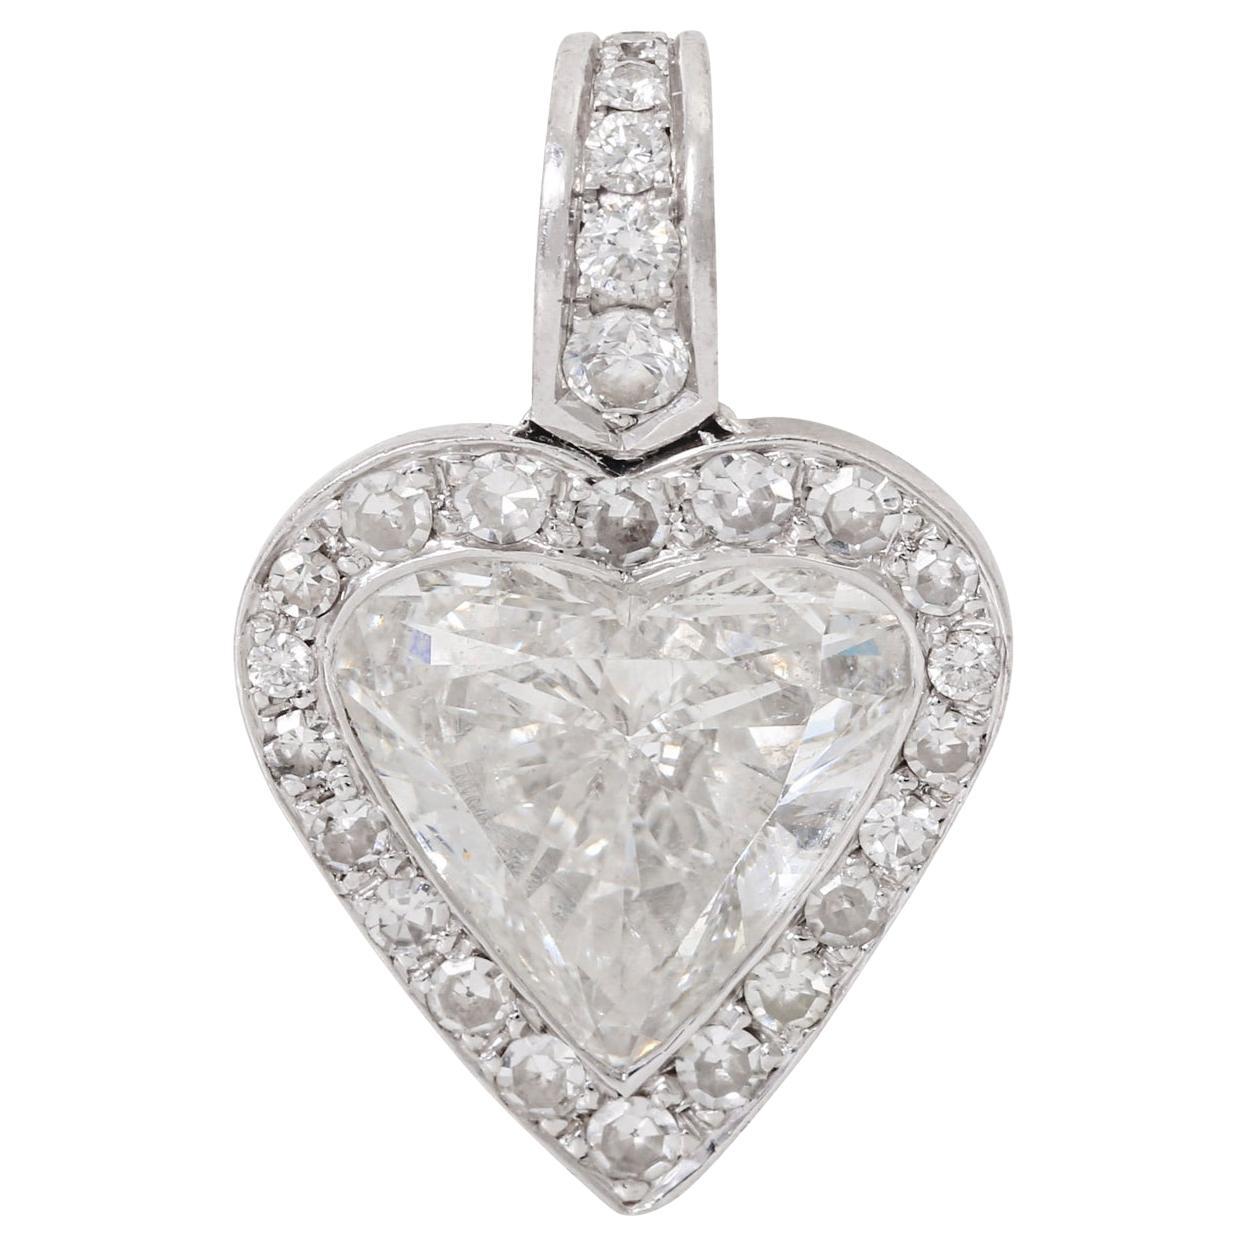 Pendant with Heart -Shaped Diamonds